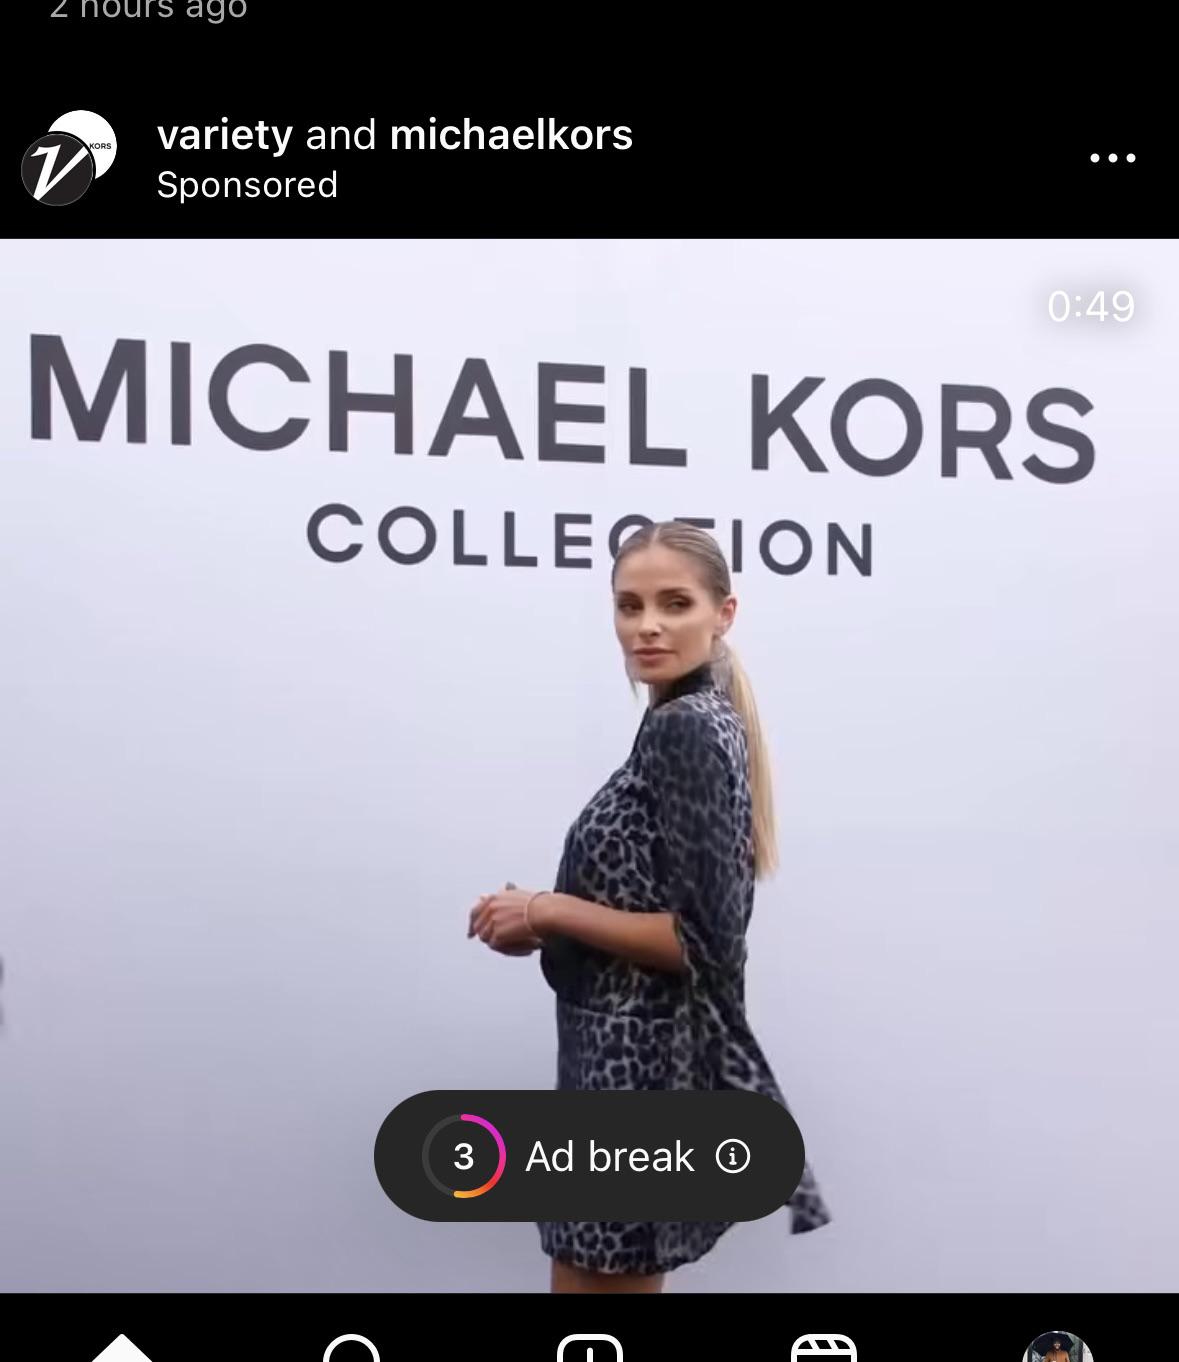 Instagram ad break info